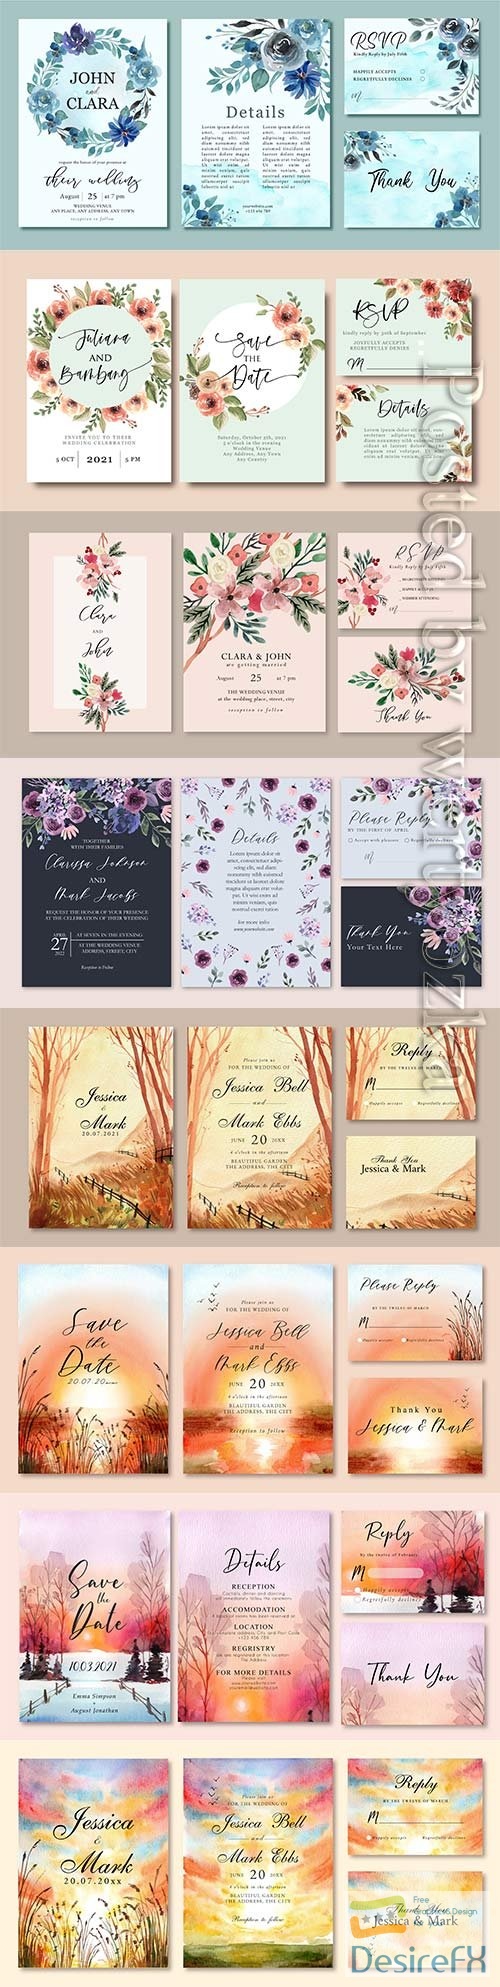 Wedding invitation card design with flower